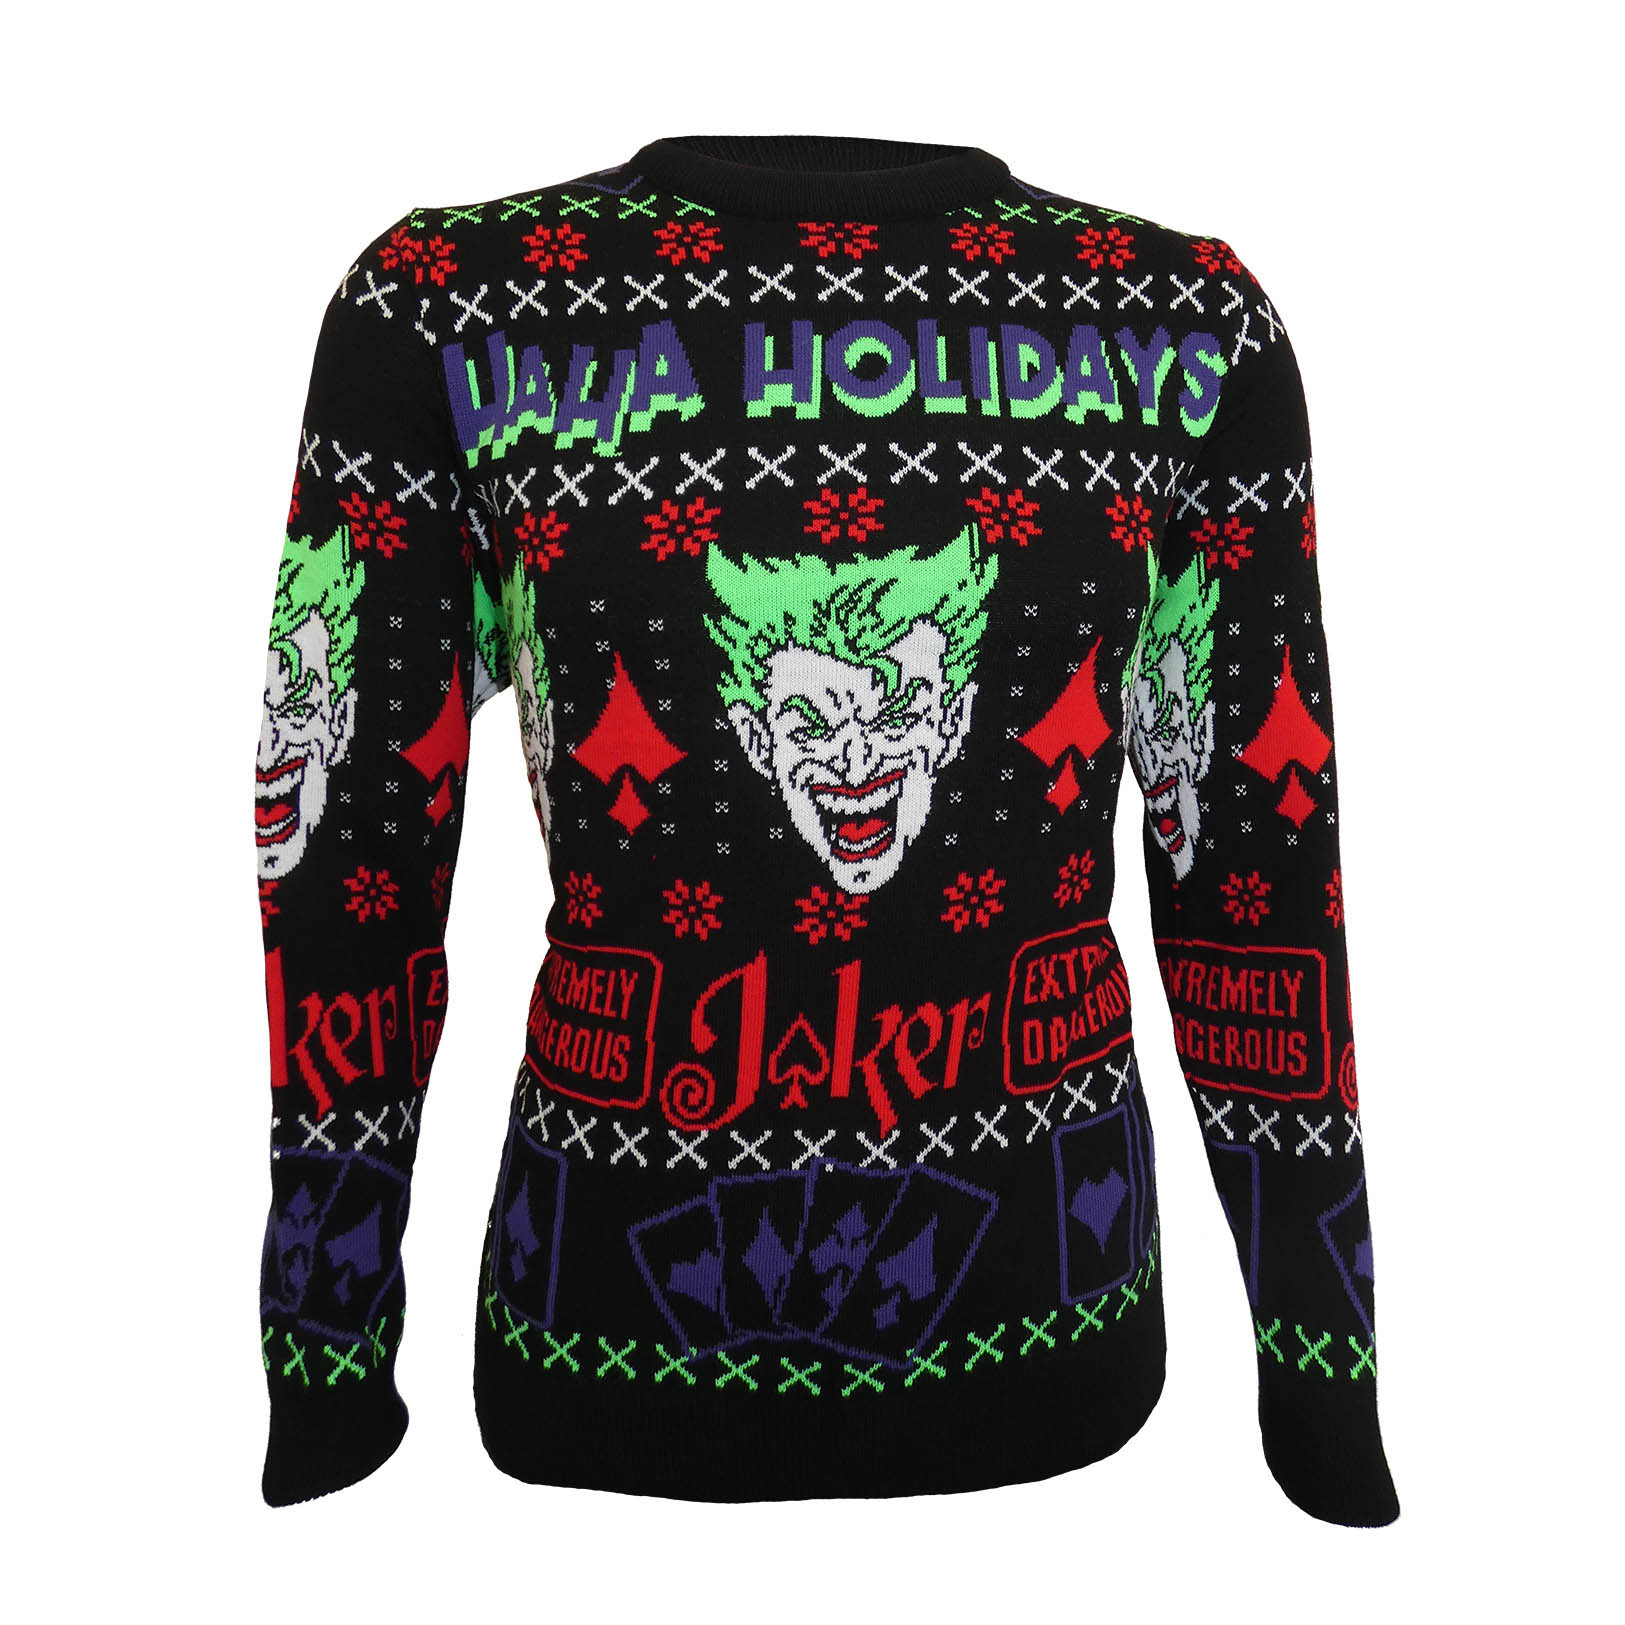 DC Comics JokerHaHa Holiday Knitted Sweatshirt